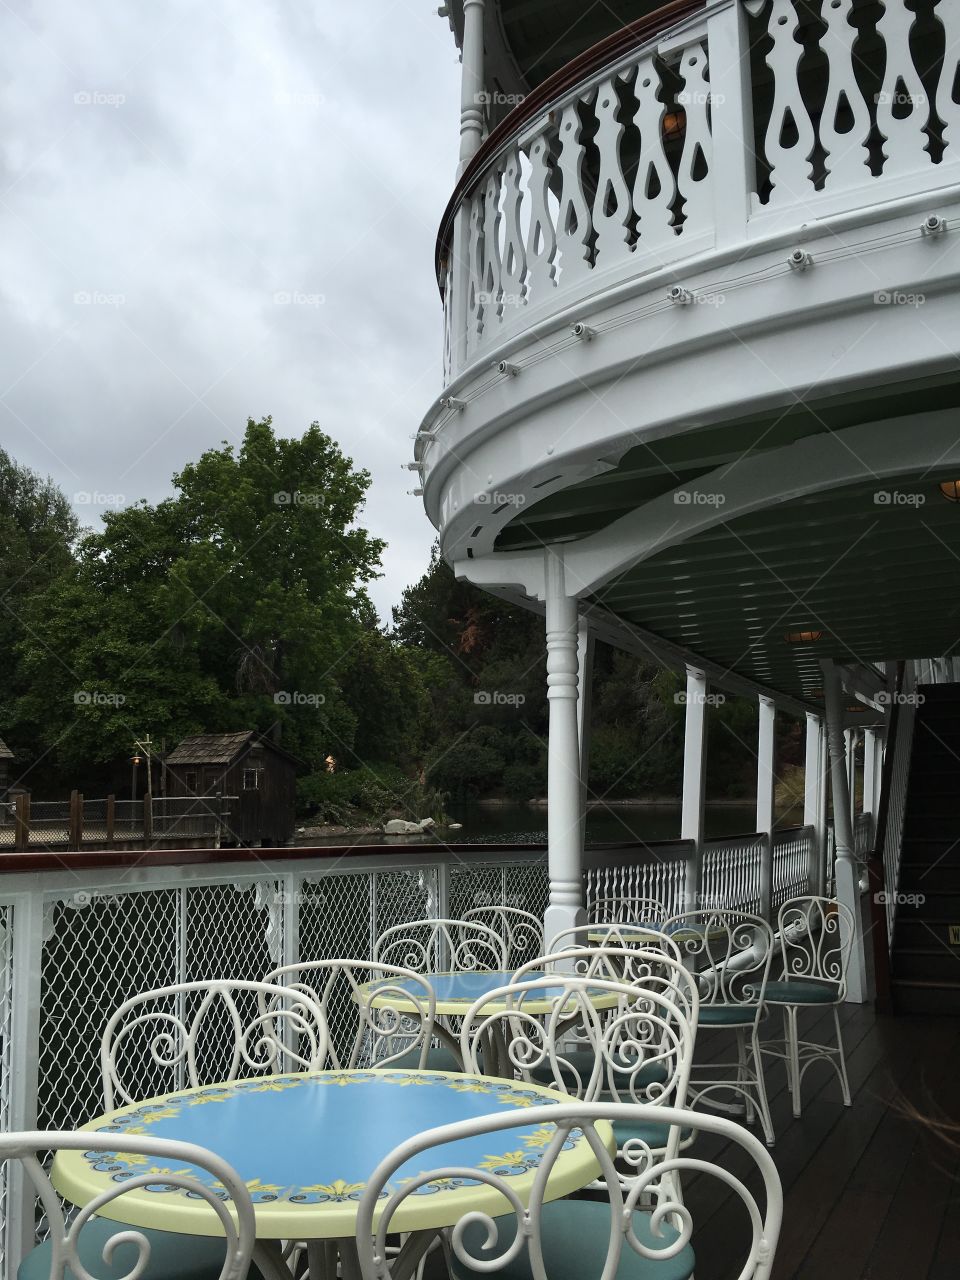 Disneyland riverboat 